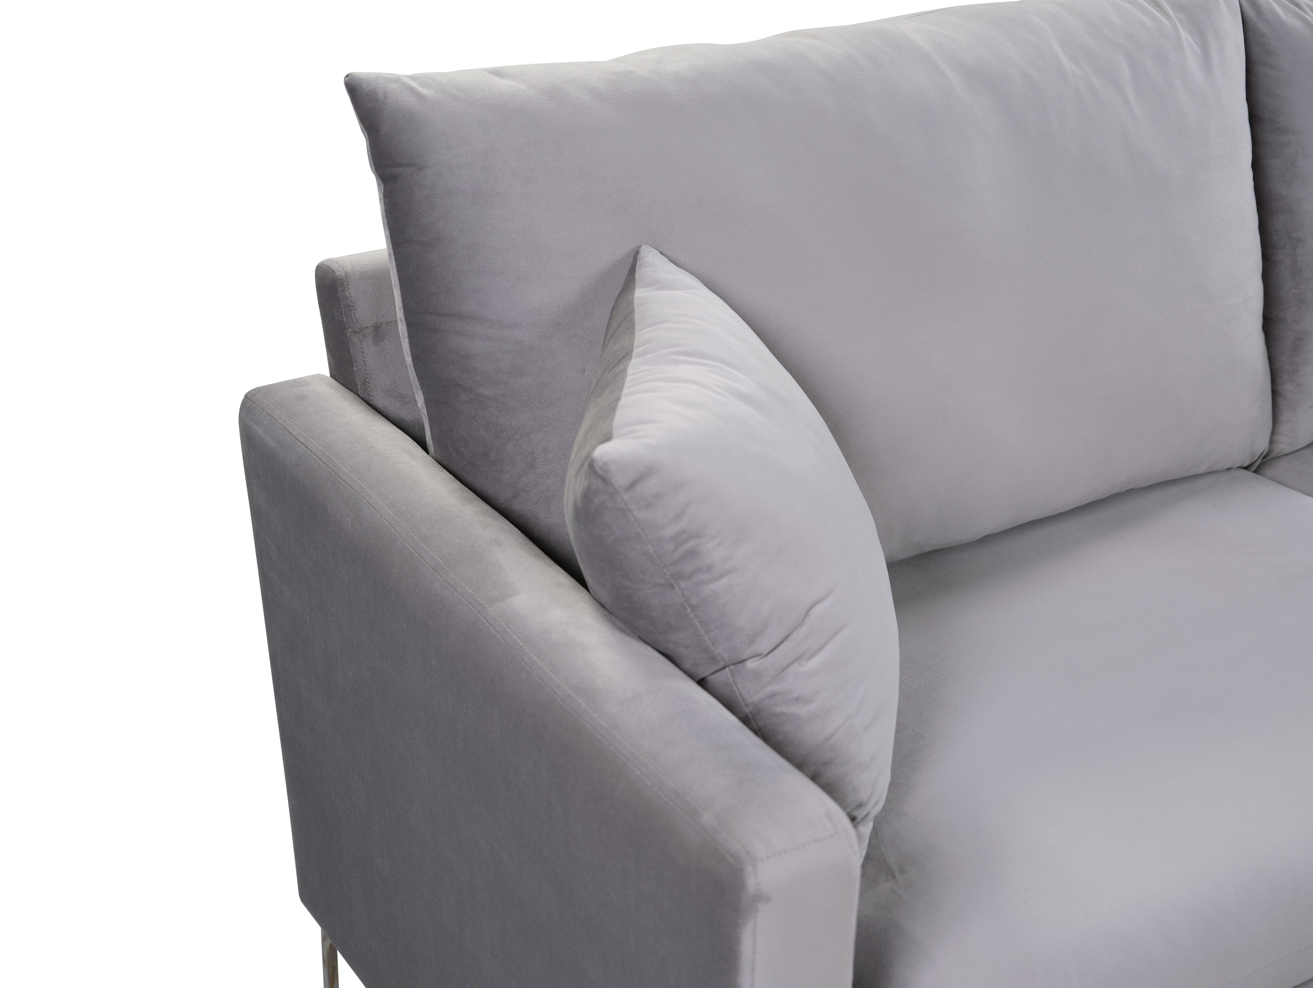 H1934 - 3-Seater Sofa (Gray / Silver Metal Legs) - 47688